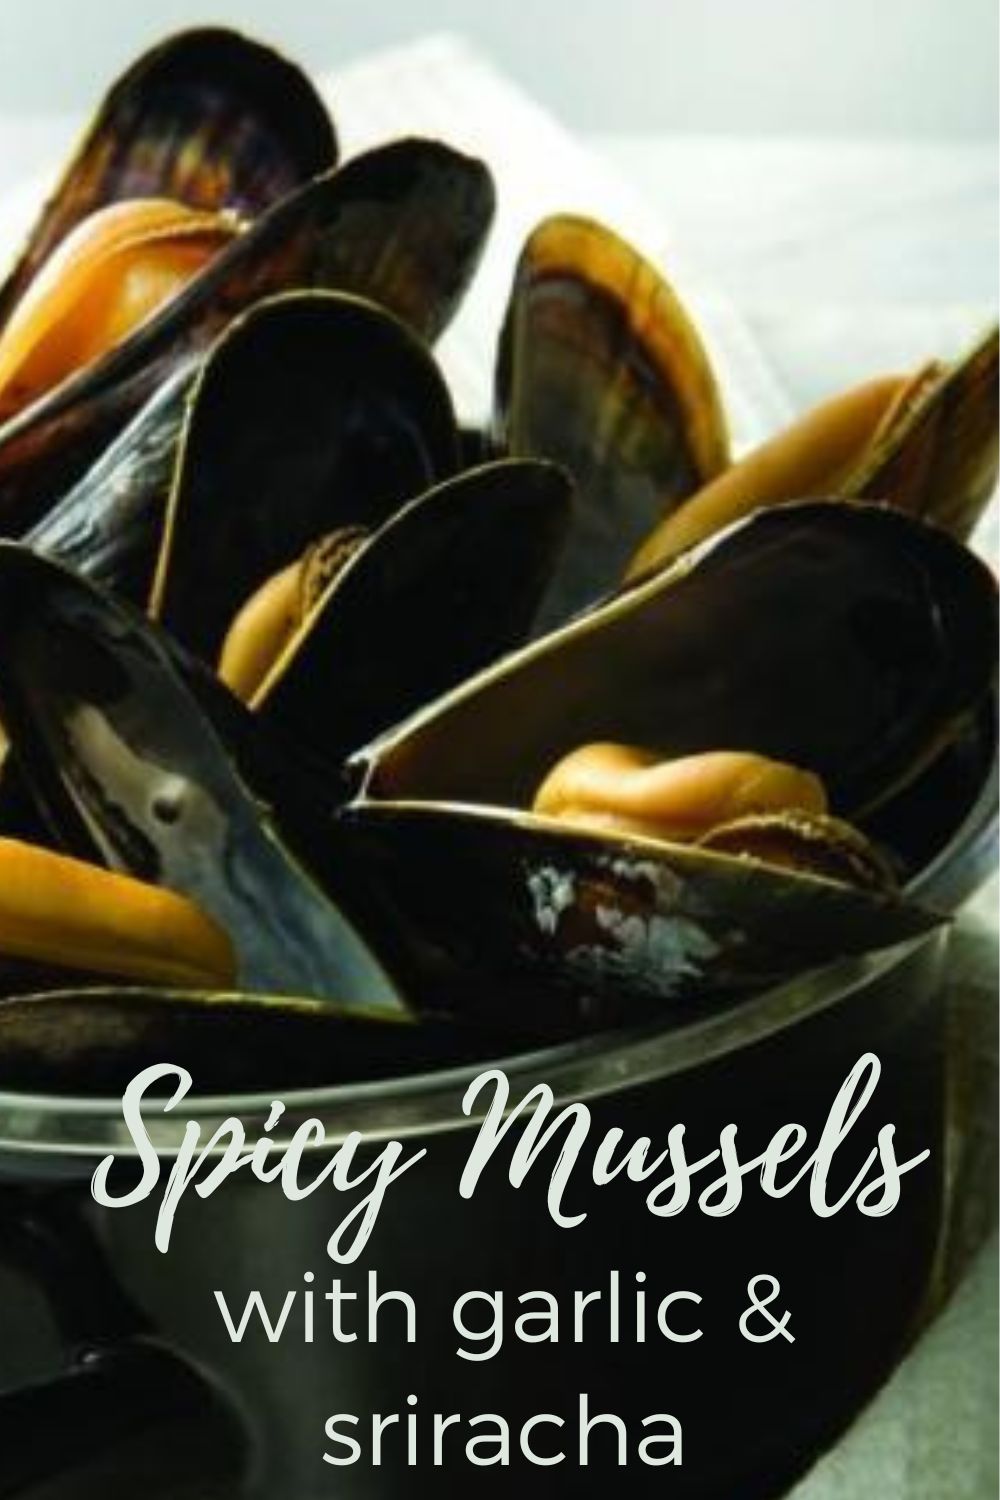 Spicy Mussels recipe with garlic & sriracha graphic